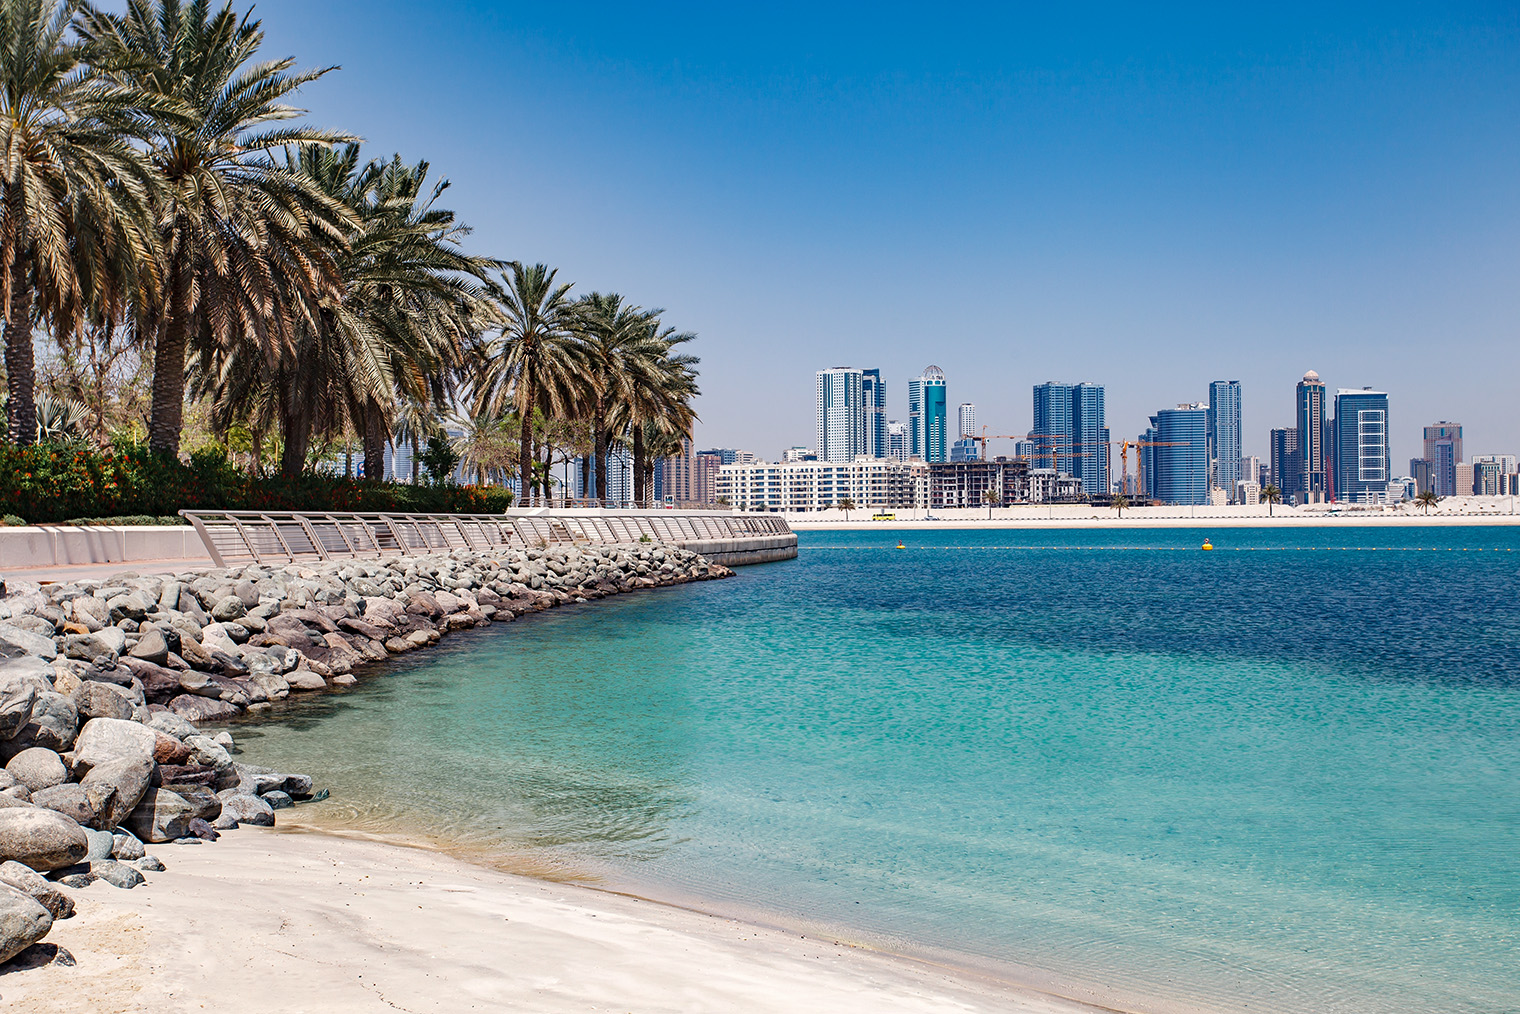 Пляж Al Khan. Фотография: ElenVD / Shutterstock / Fotodom